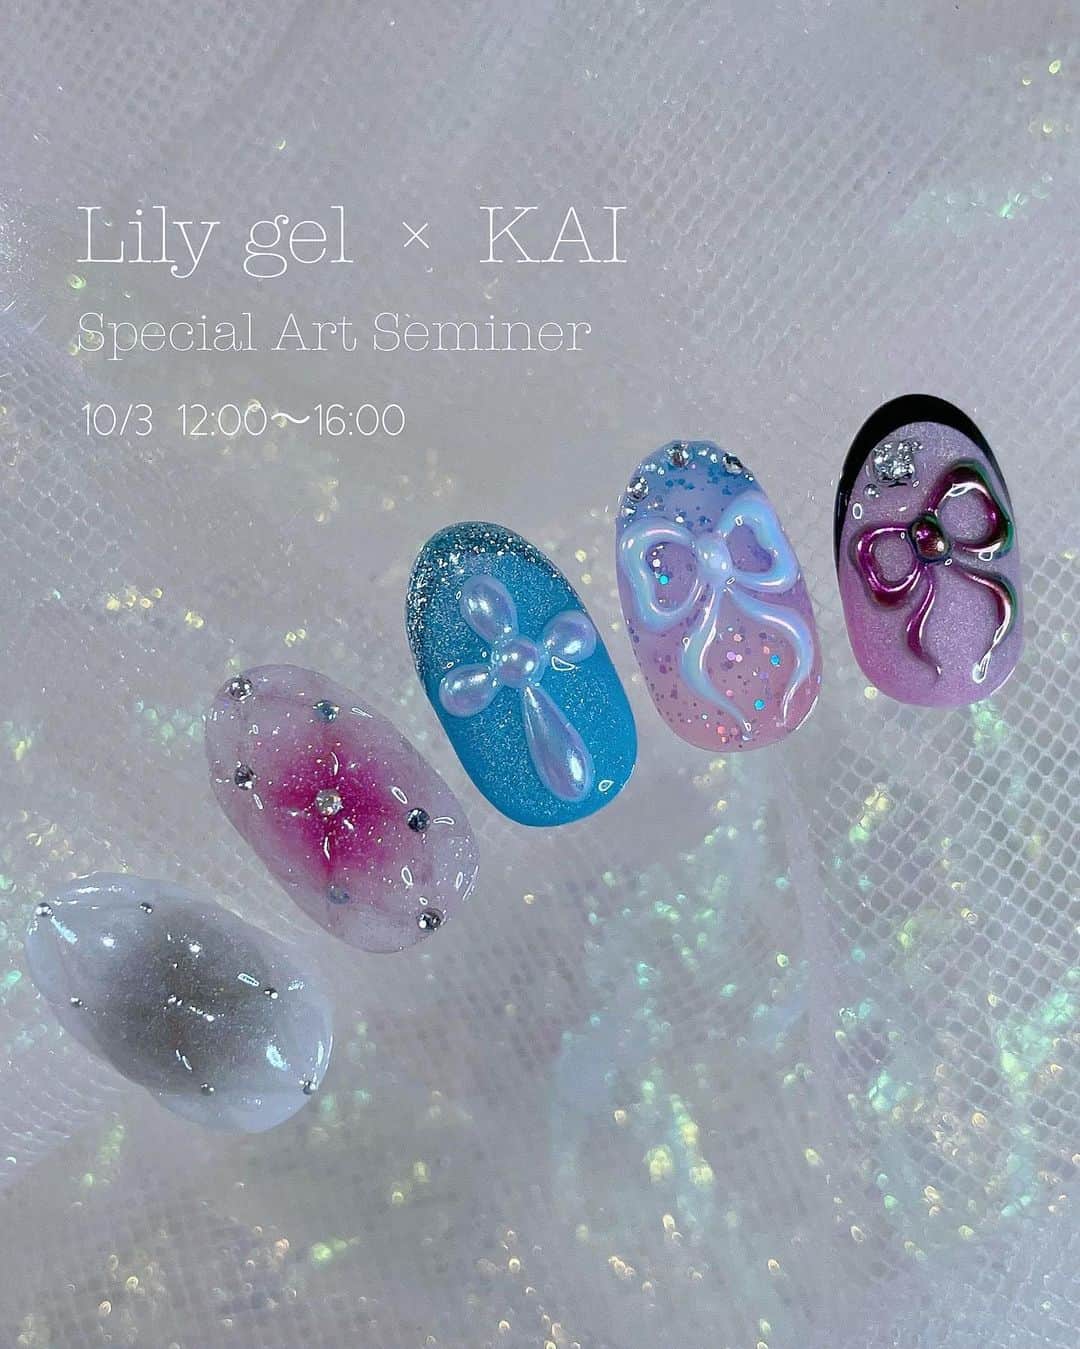 KAI32のインスタグラム：「. Special Seminar 🎃🦇  Lily gel × KAI  Special Art Seminer  @lilygel.nail  @kai_prw   皆様のリクエストにお応えして リリージェルとKAIのコラボセミナーを開催いたします💅🏻  【日時】10/3 (火) 時間12:00〜16:00 【場所】千葉県市川市 　　　　JR本八幡駅前徒歩1分  《セミナー内容》 ・リリージェルを使用したアートデモ3種類 （バルーンクロス、バルーンリボン、クリアキルティング） ・実践練習 ・質疑応答  【定員】18名 【受講料】¥8,800 【受講資格】 ジェルネイル経験者 ※検定や実務不問、セルフネイラーさんもOK！  【持ち物】 当日使用するジェルは貸し出し致します✨ その他筆(ブラシ)、チップ、チップスタンド、etc ※申し込み確定後にご連絡致します。  参加ご希望の方は @lilygel.nail プロフィールURL、Lit Link内 申し込みフォームよりお申し込みください💌 . . . #pinkrosewindow #pink_rose_window」